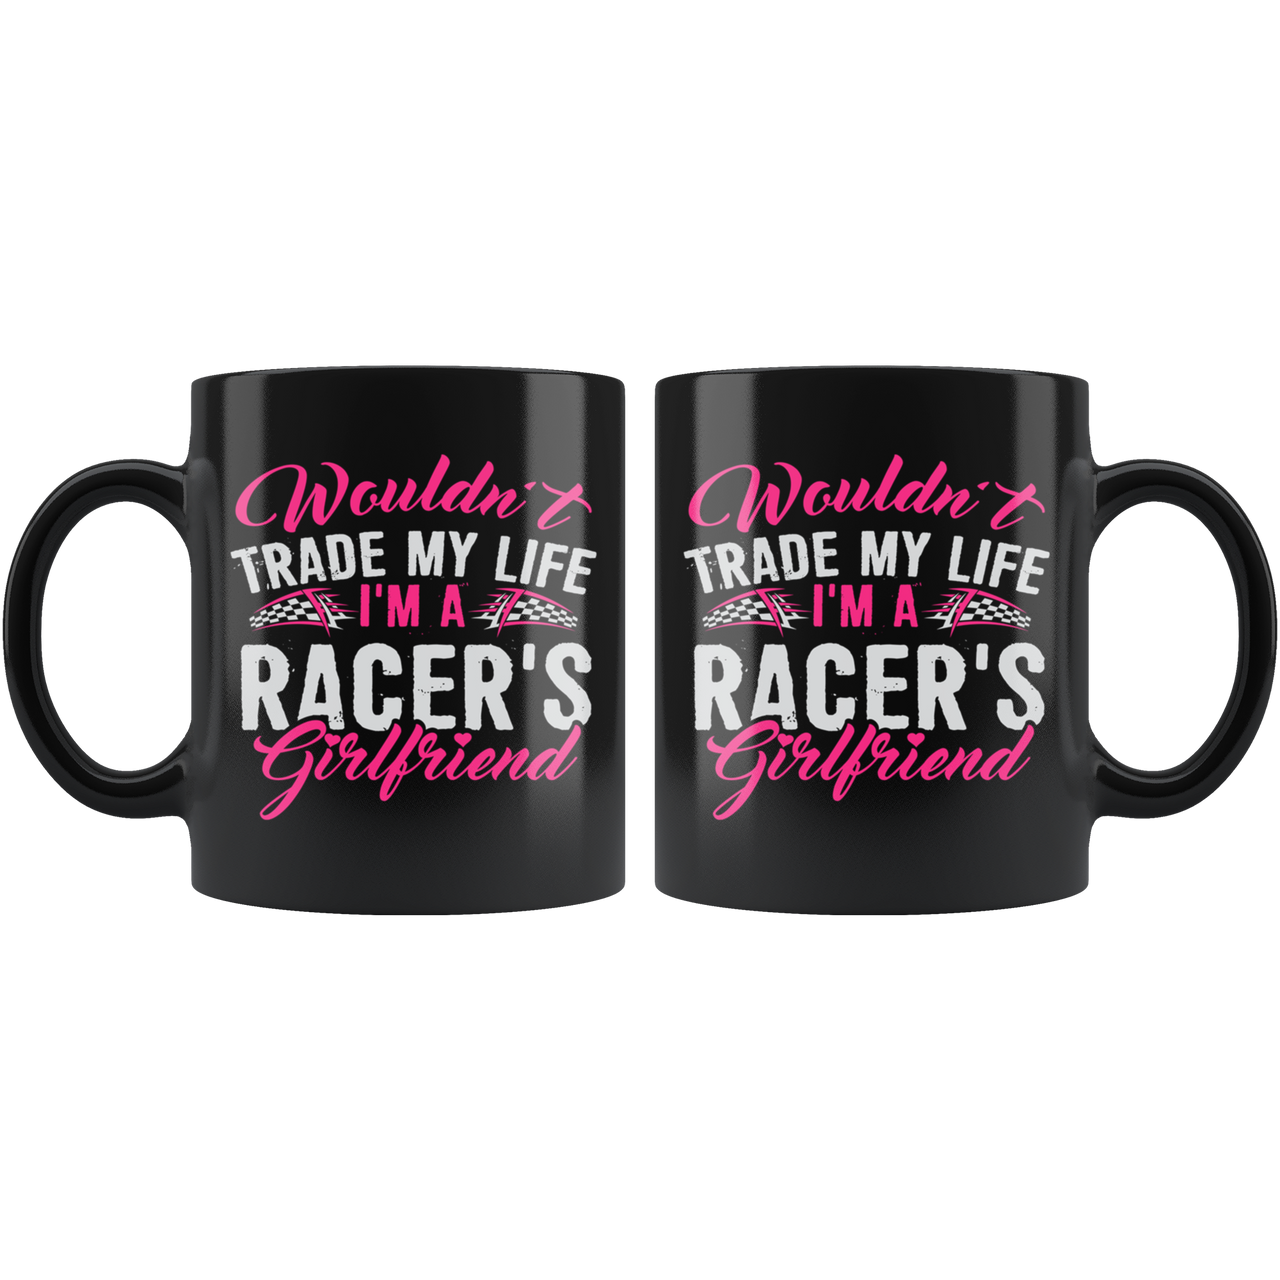 I'm A Racer's Girlfriend Mug!